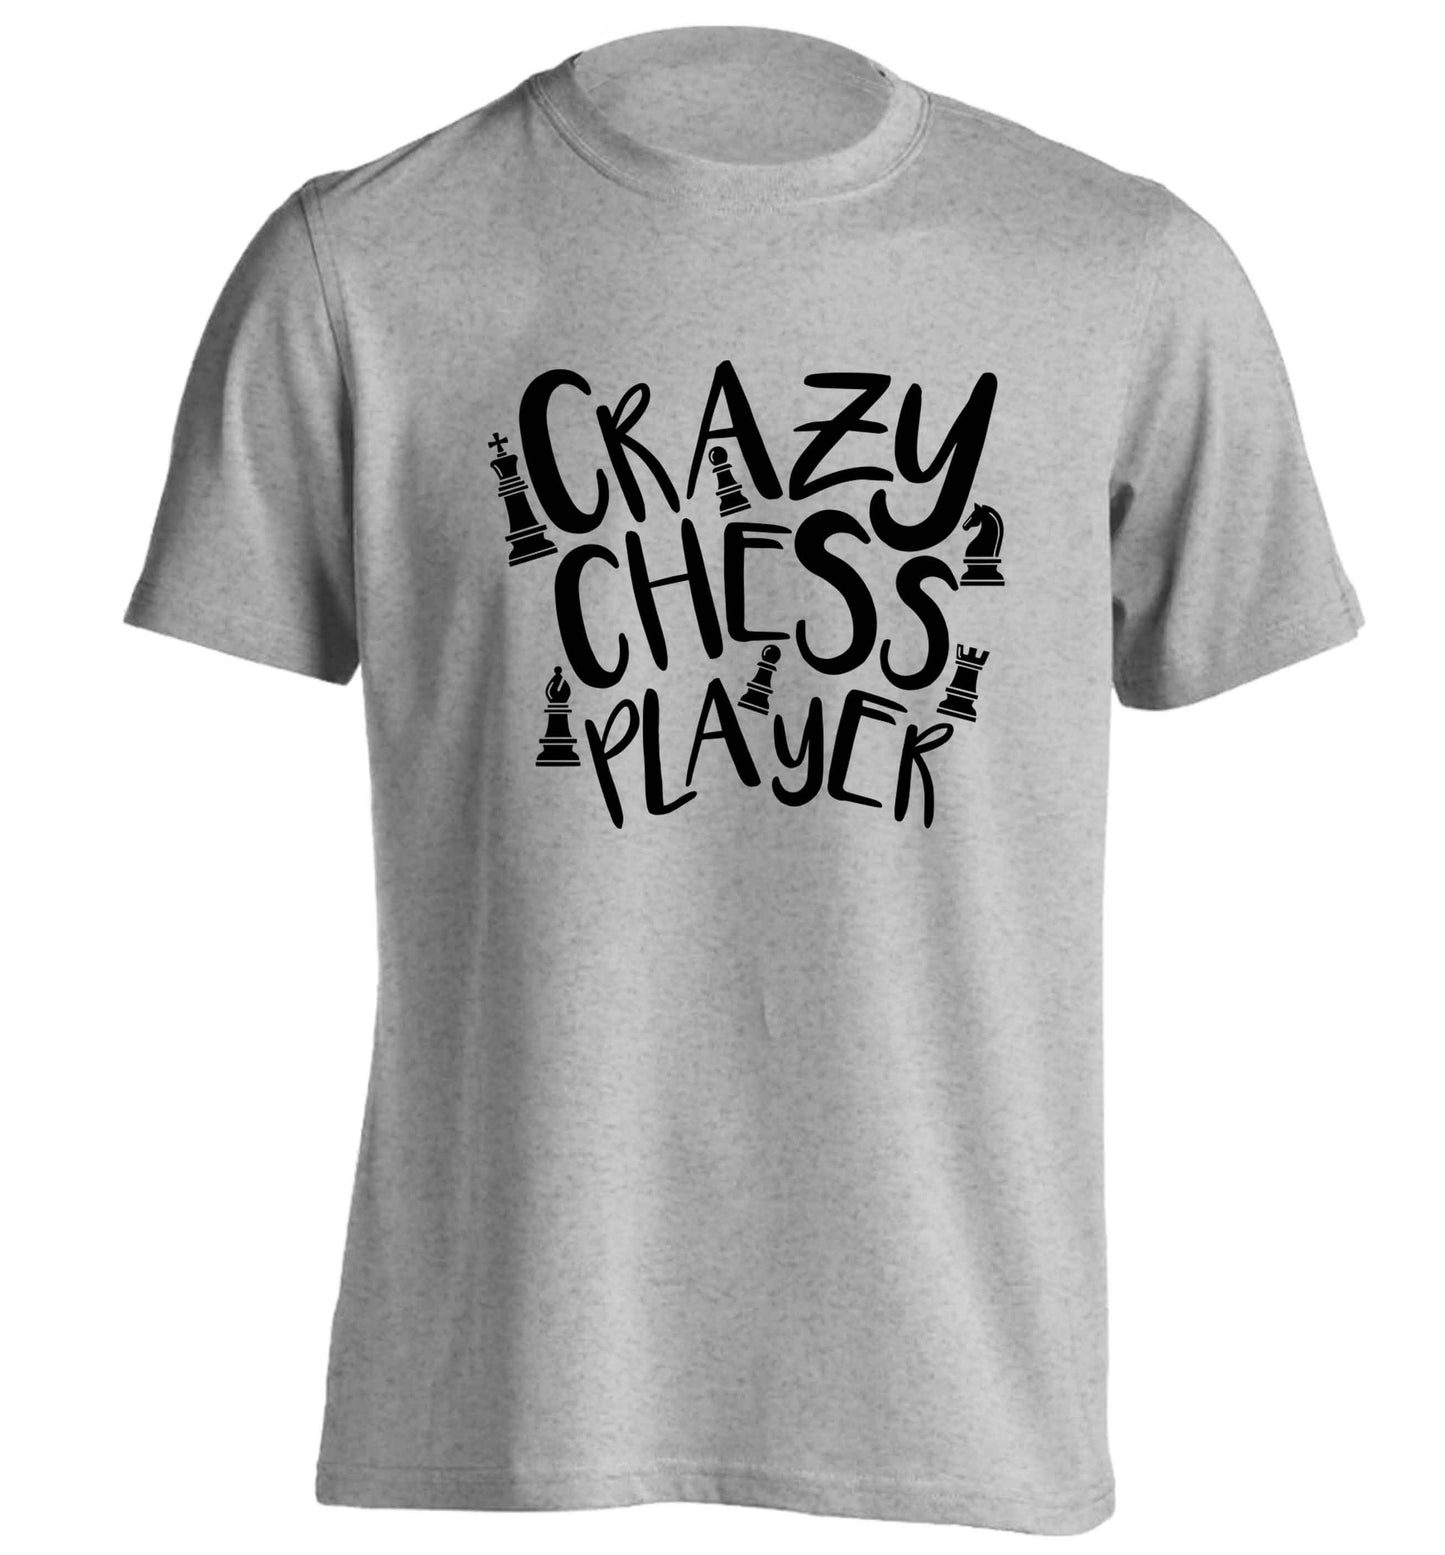 Crazy chess player adults unisex grey Tshirt 2XL